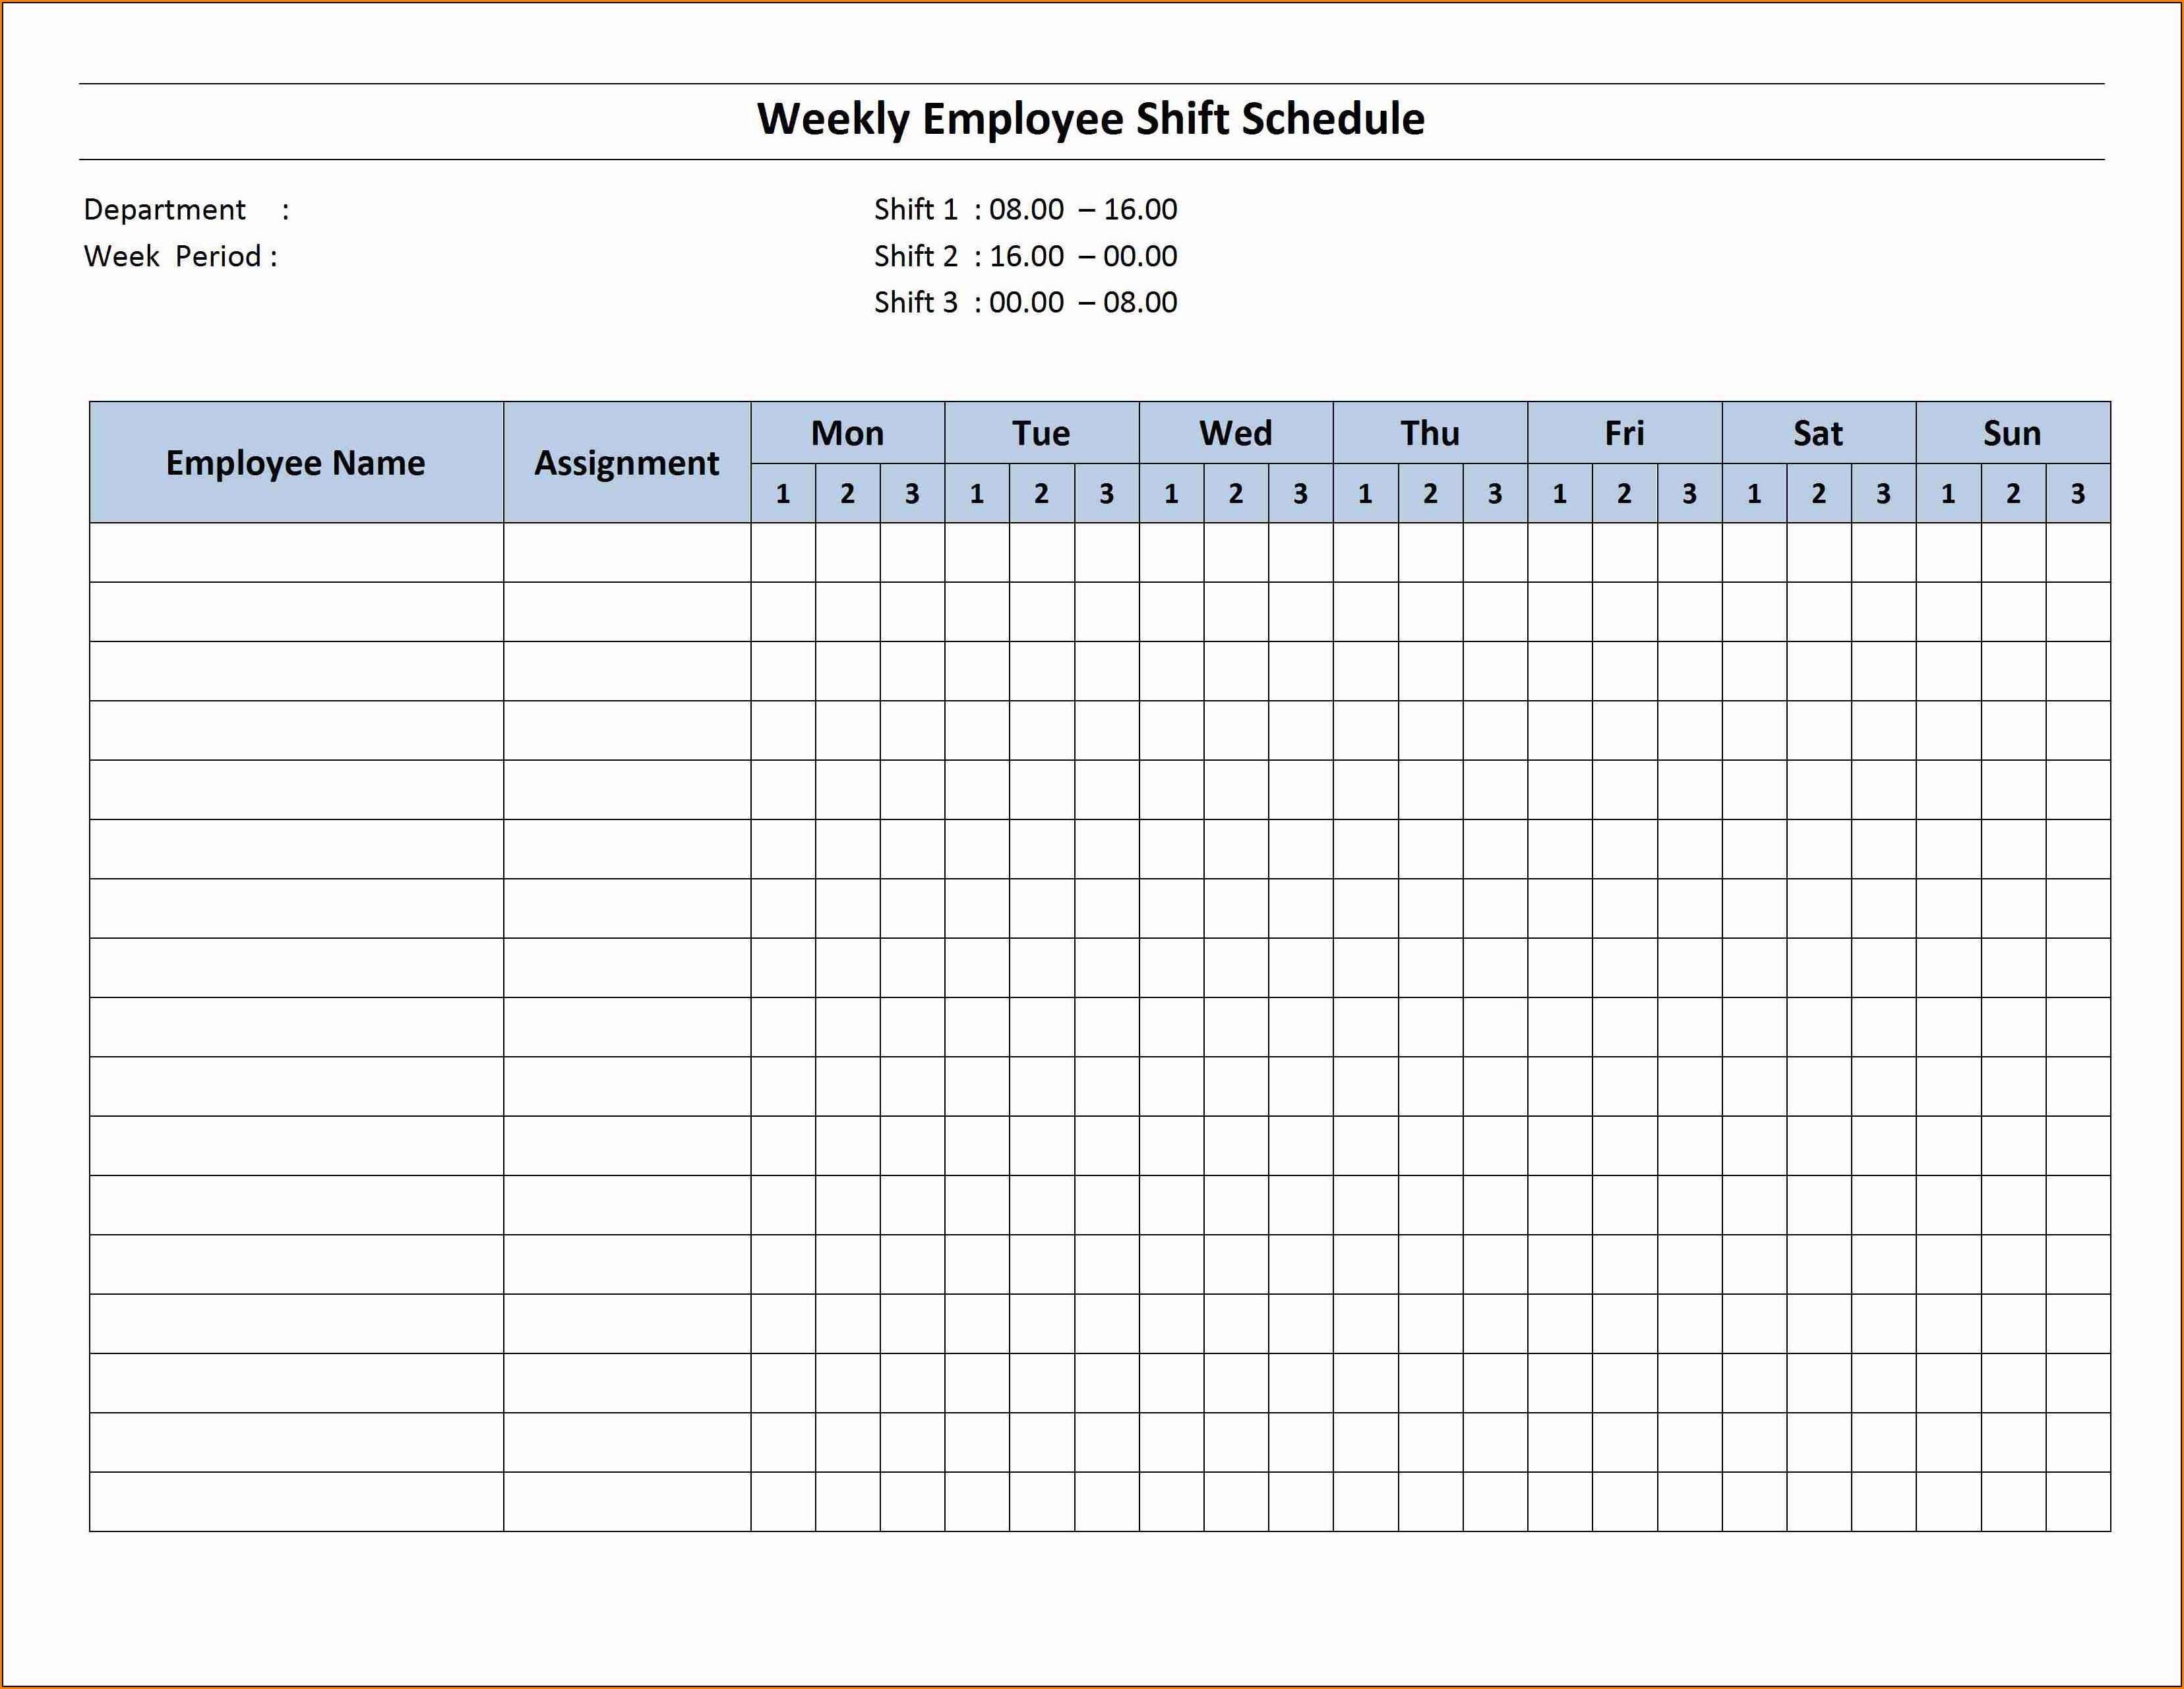 Employee Monthly Work Schedule Template